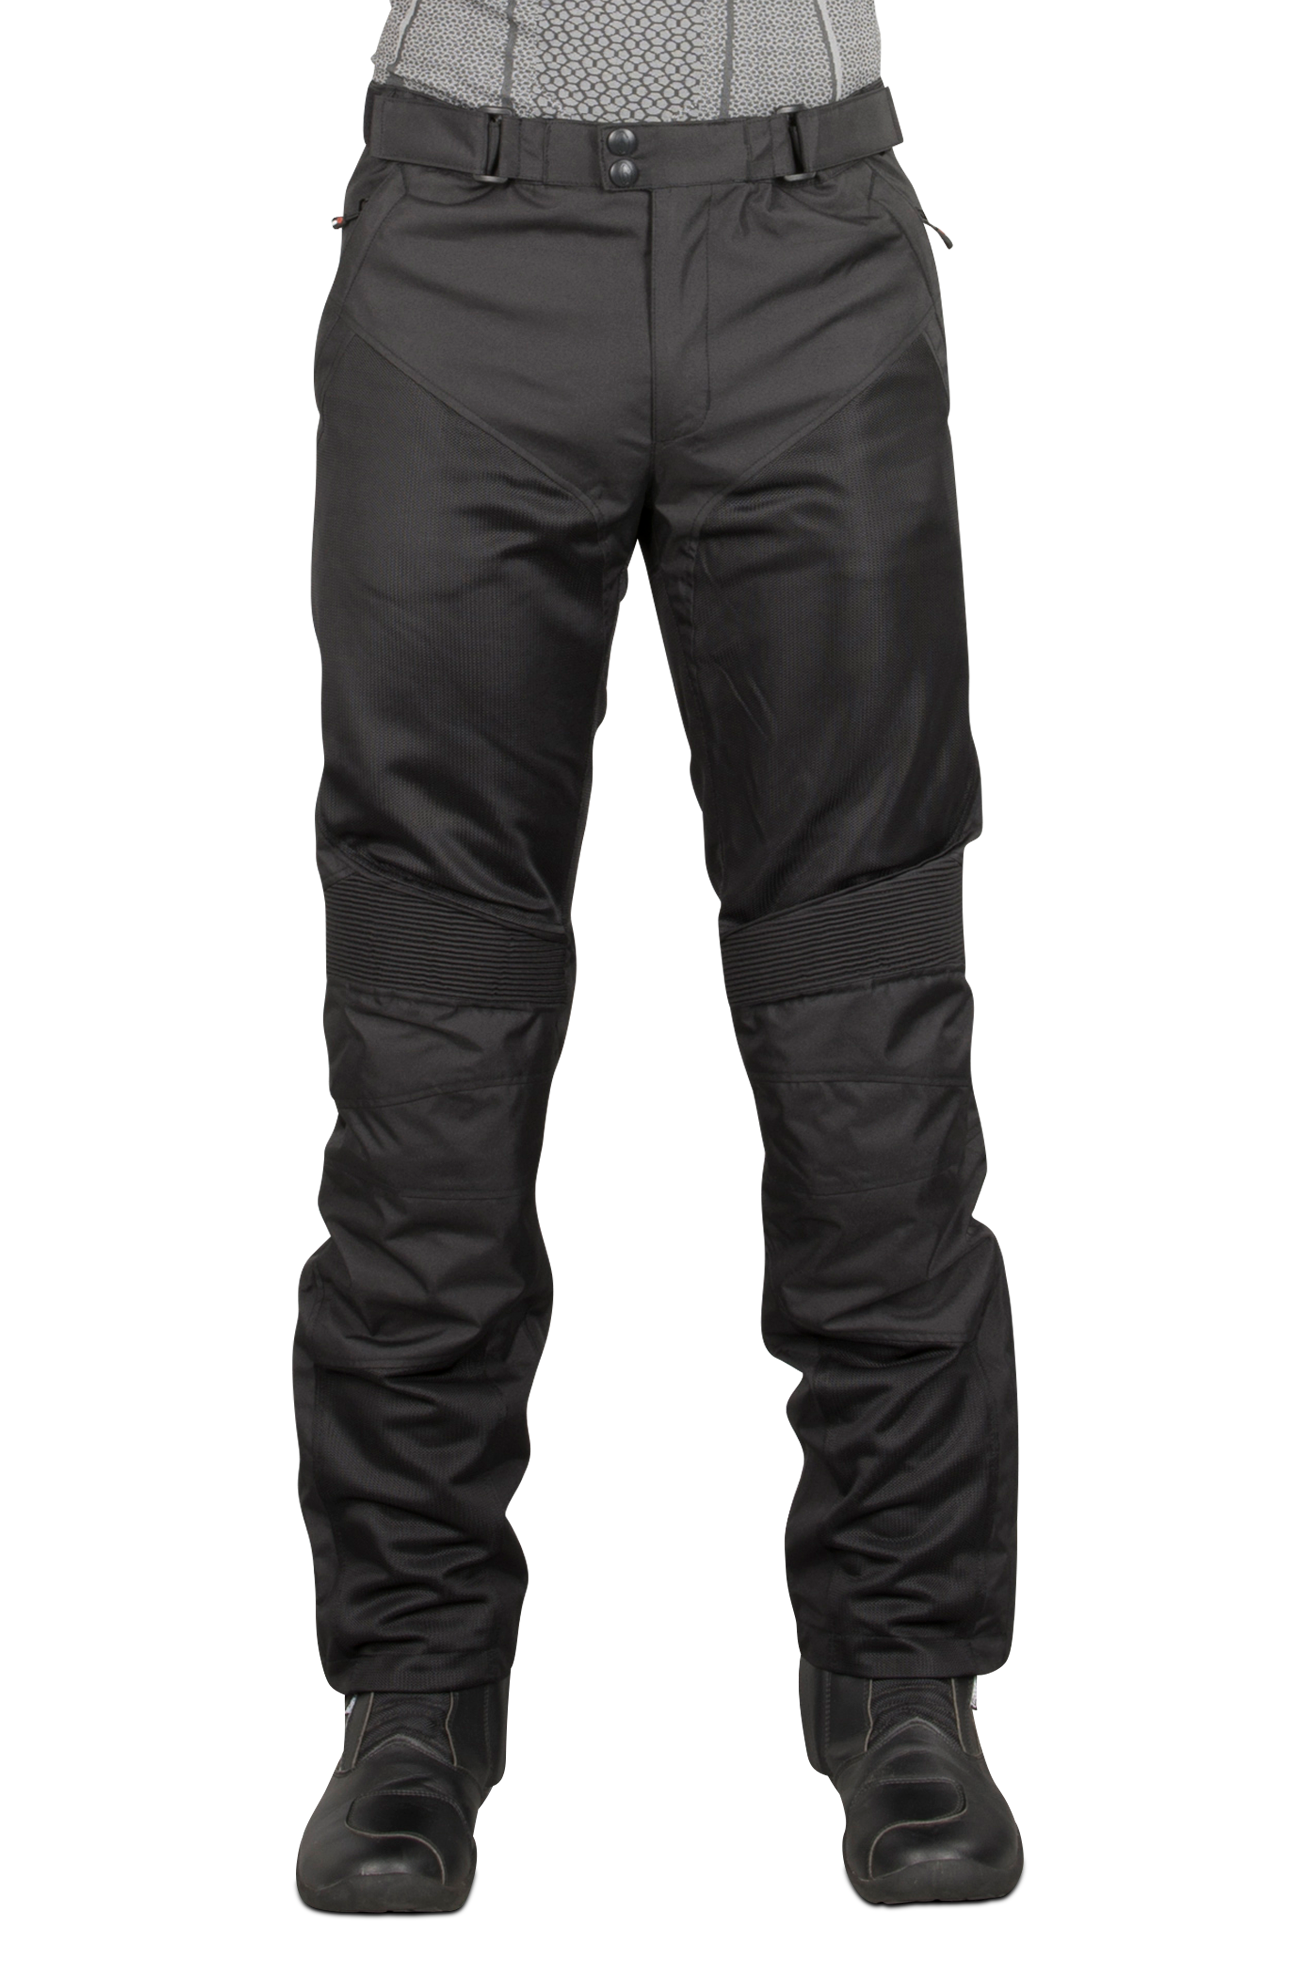 Richa Pantalones de Moto  Airbender Negros